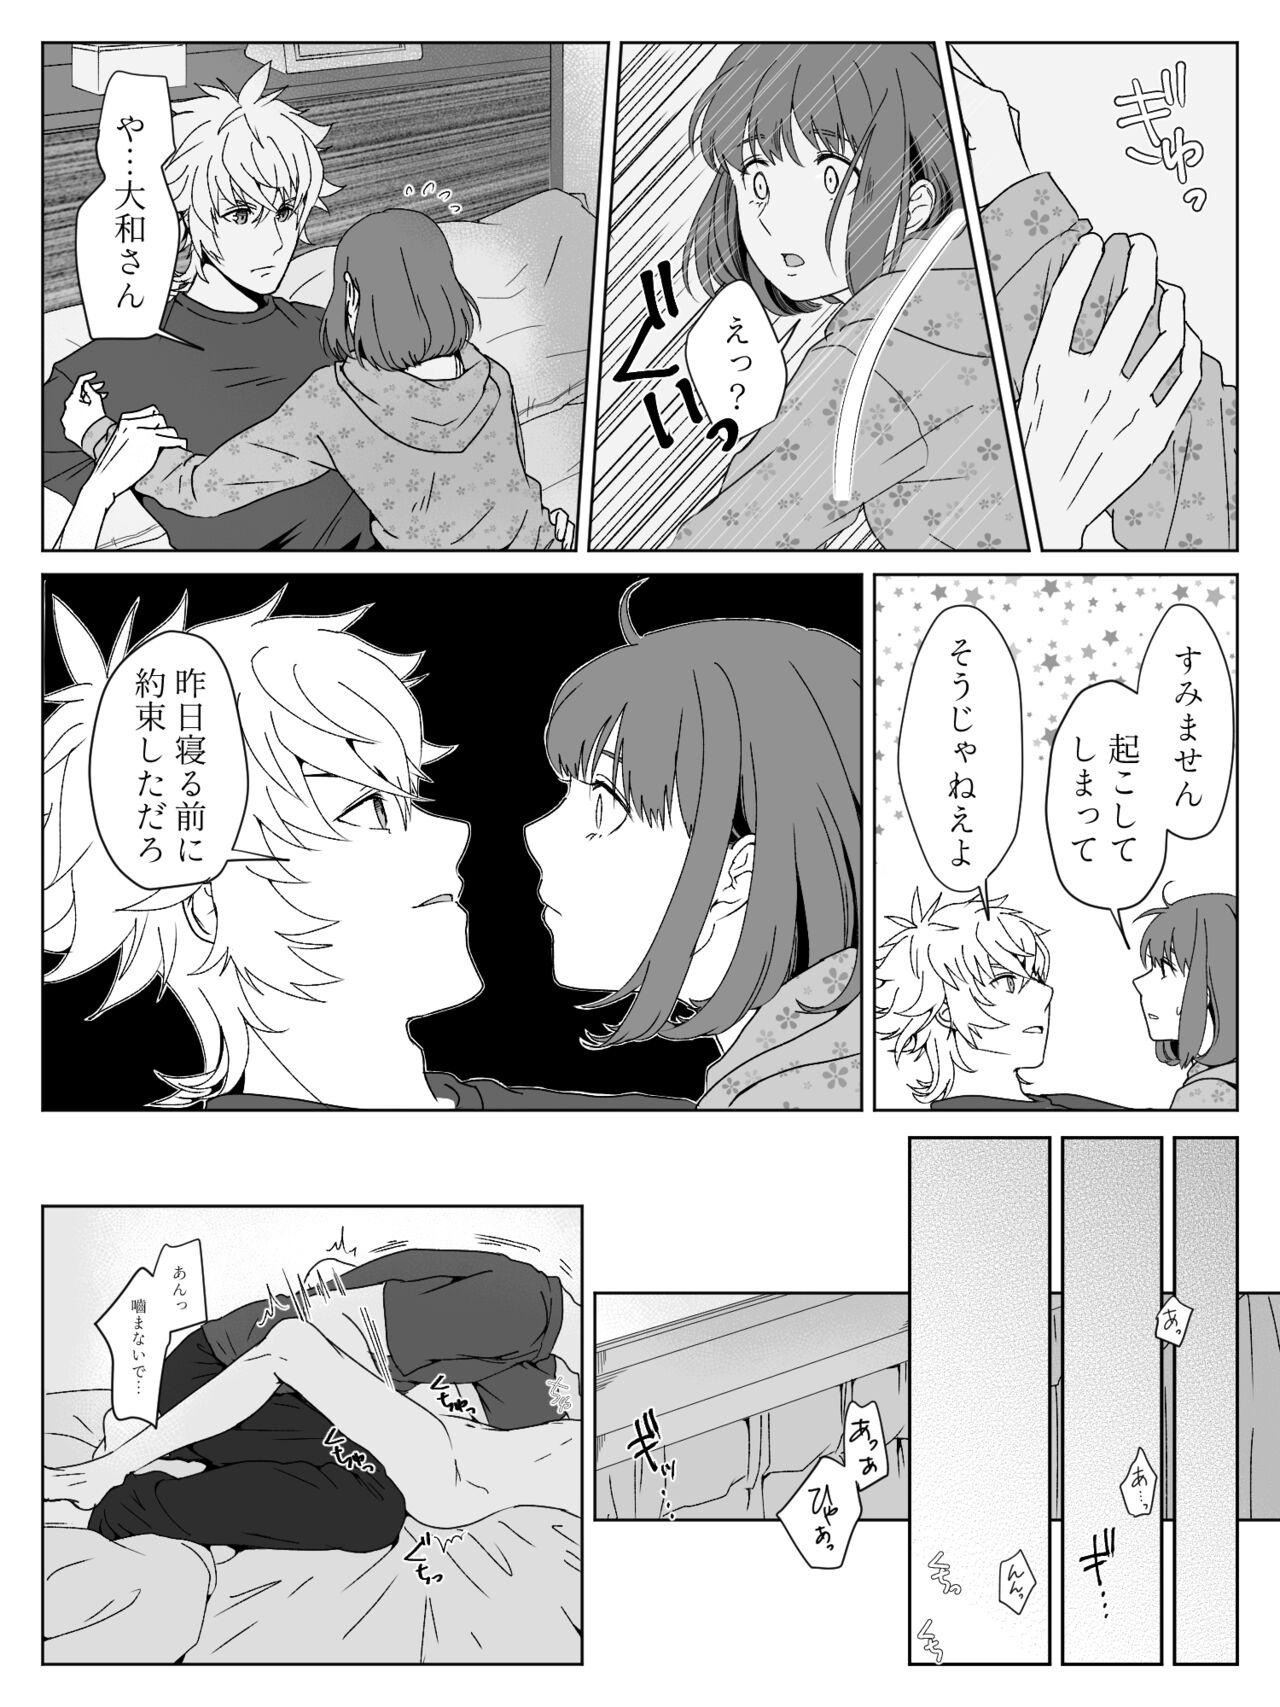 Hardcore Sex Yamato Haru Manga - Uta no prince sama Curves - Page 9